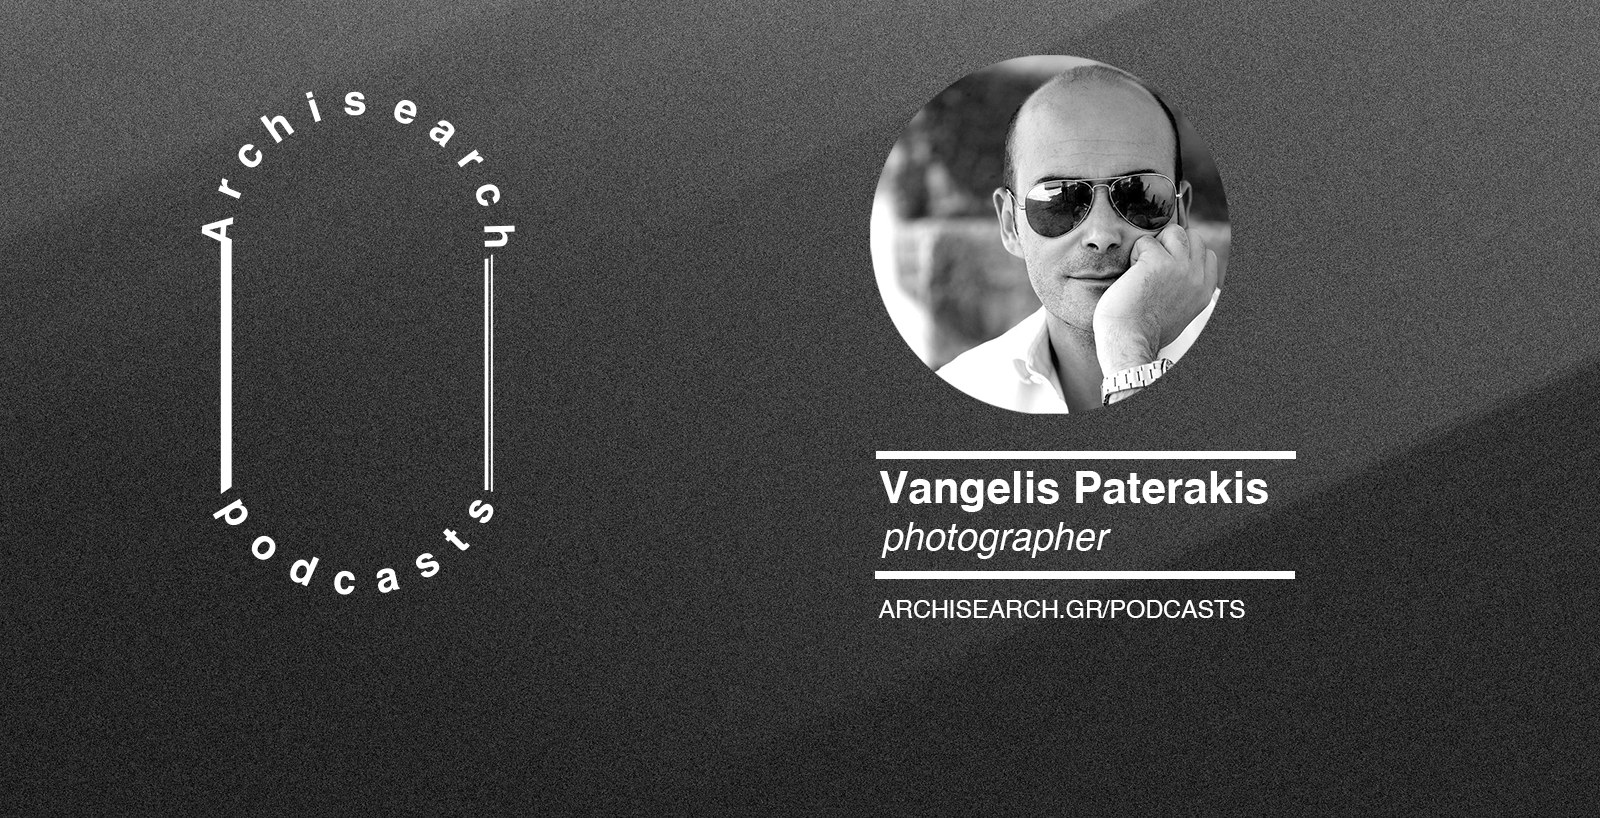 Archisearch Archisearch Talks_Photographer's Eye | Vangelis Paterakis podcast recap